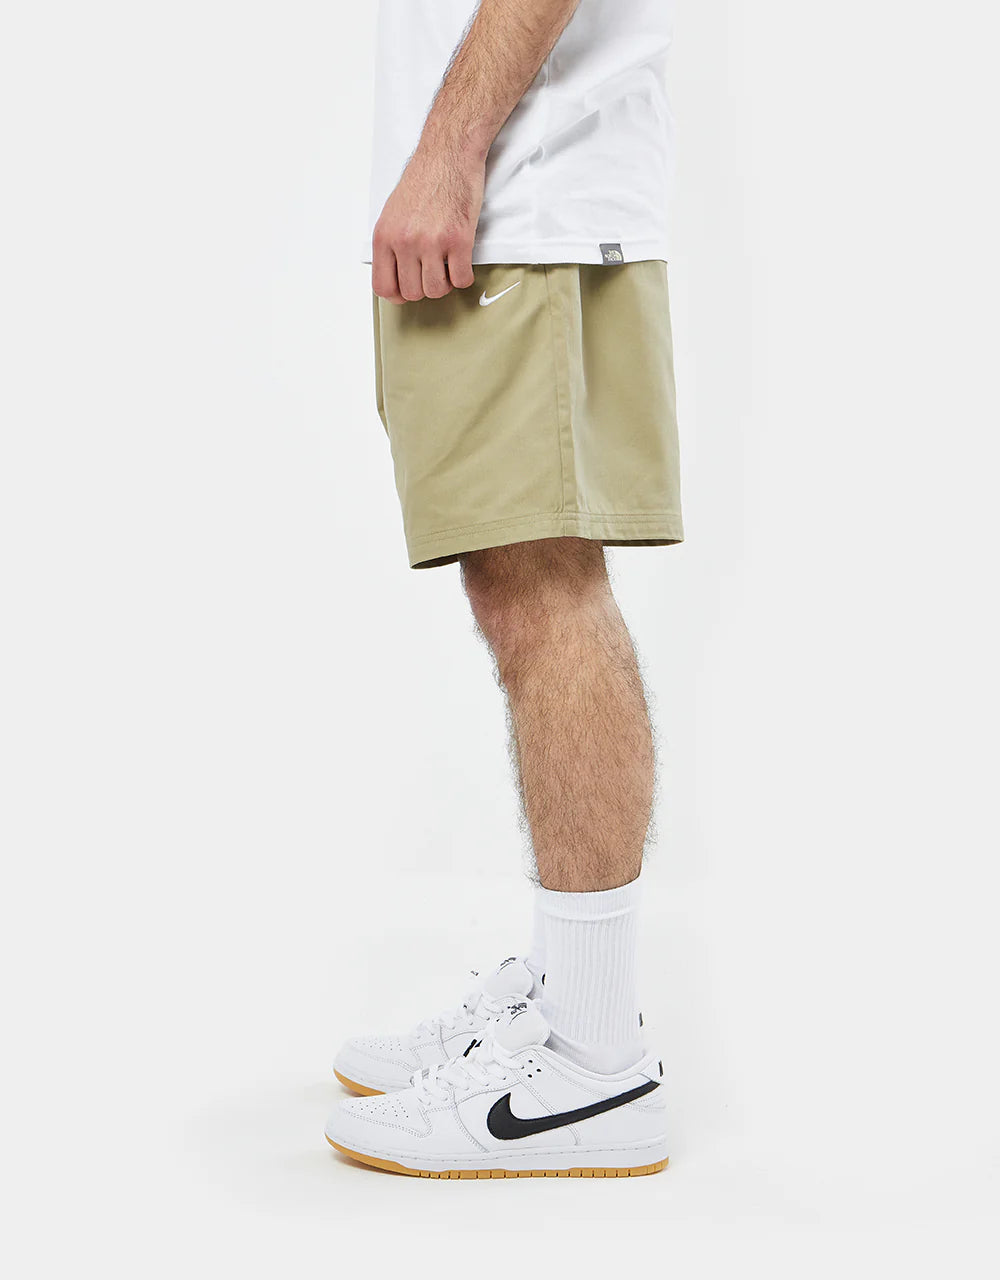 Nike SB Skyring Short - Neutral Olive/White - Sun Diego Boardshop